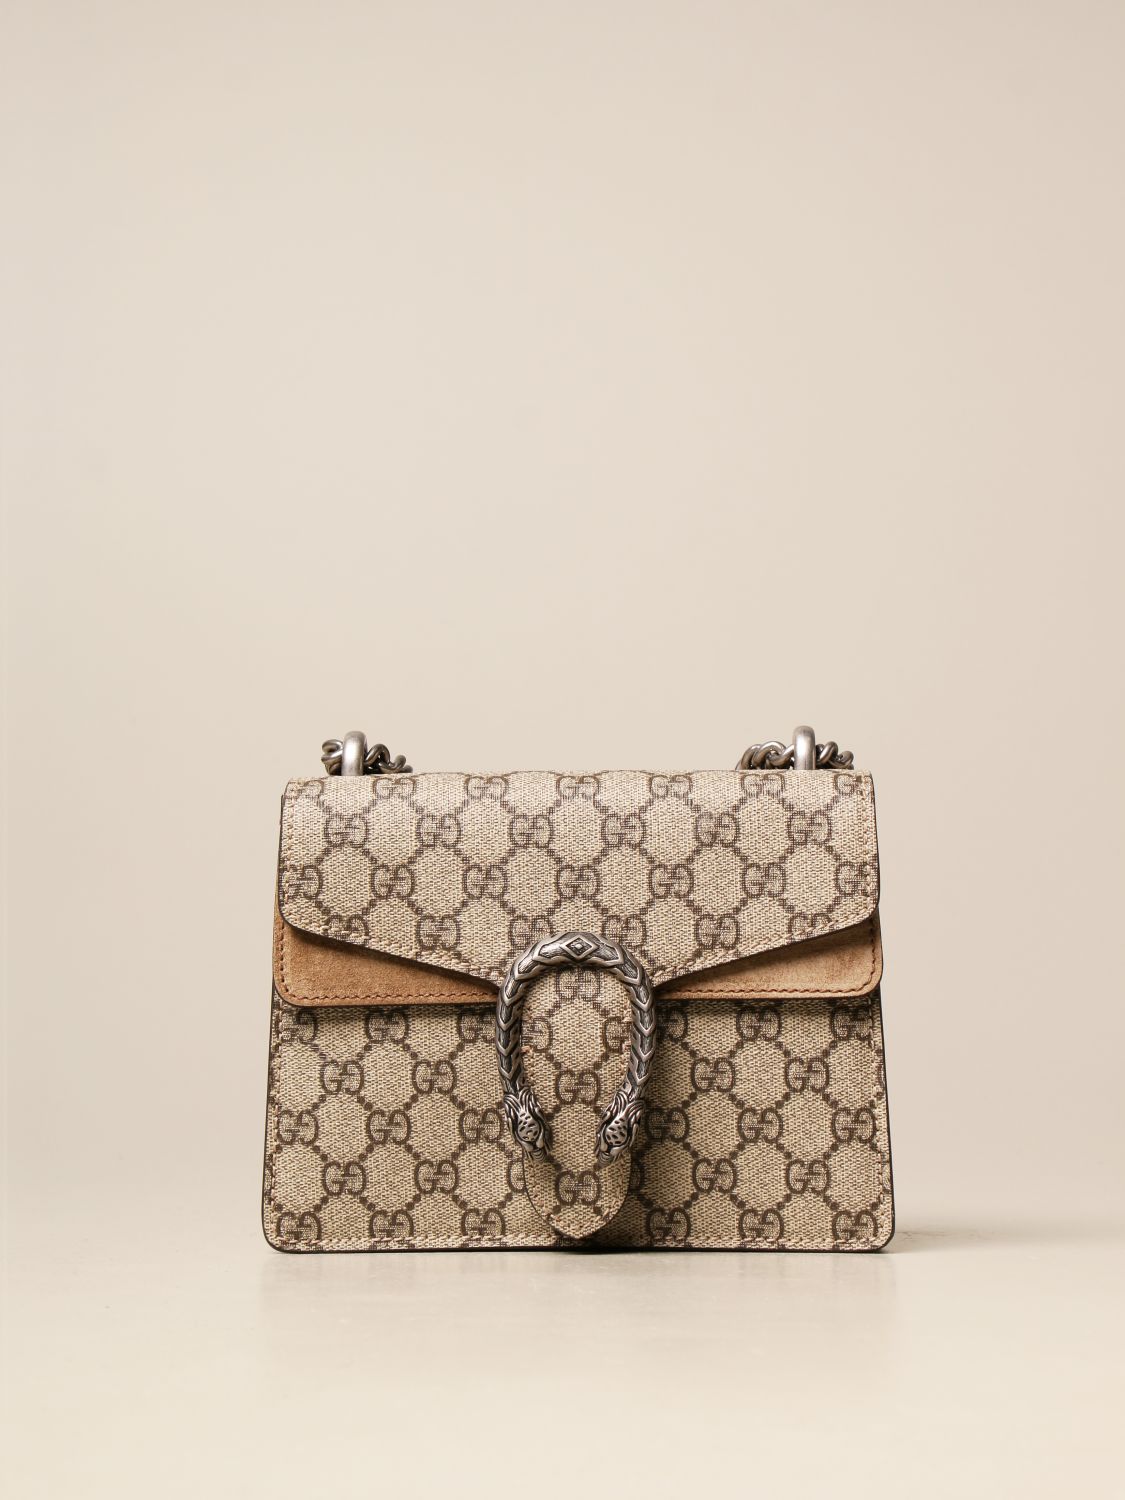 Gucci Dionysus bag in GG Supreme fabric